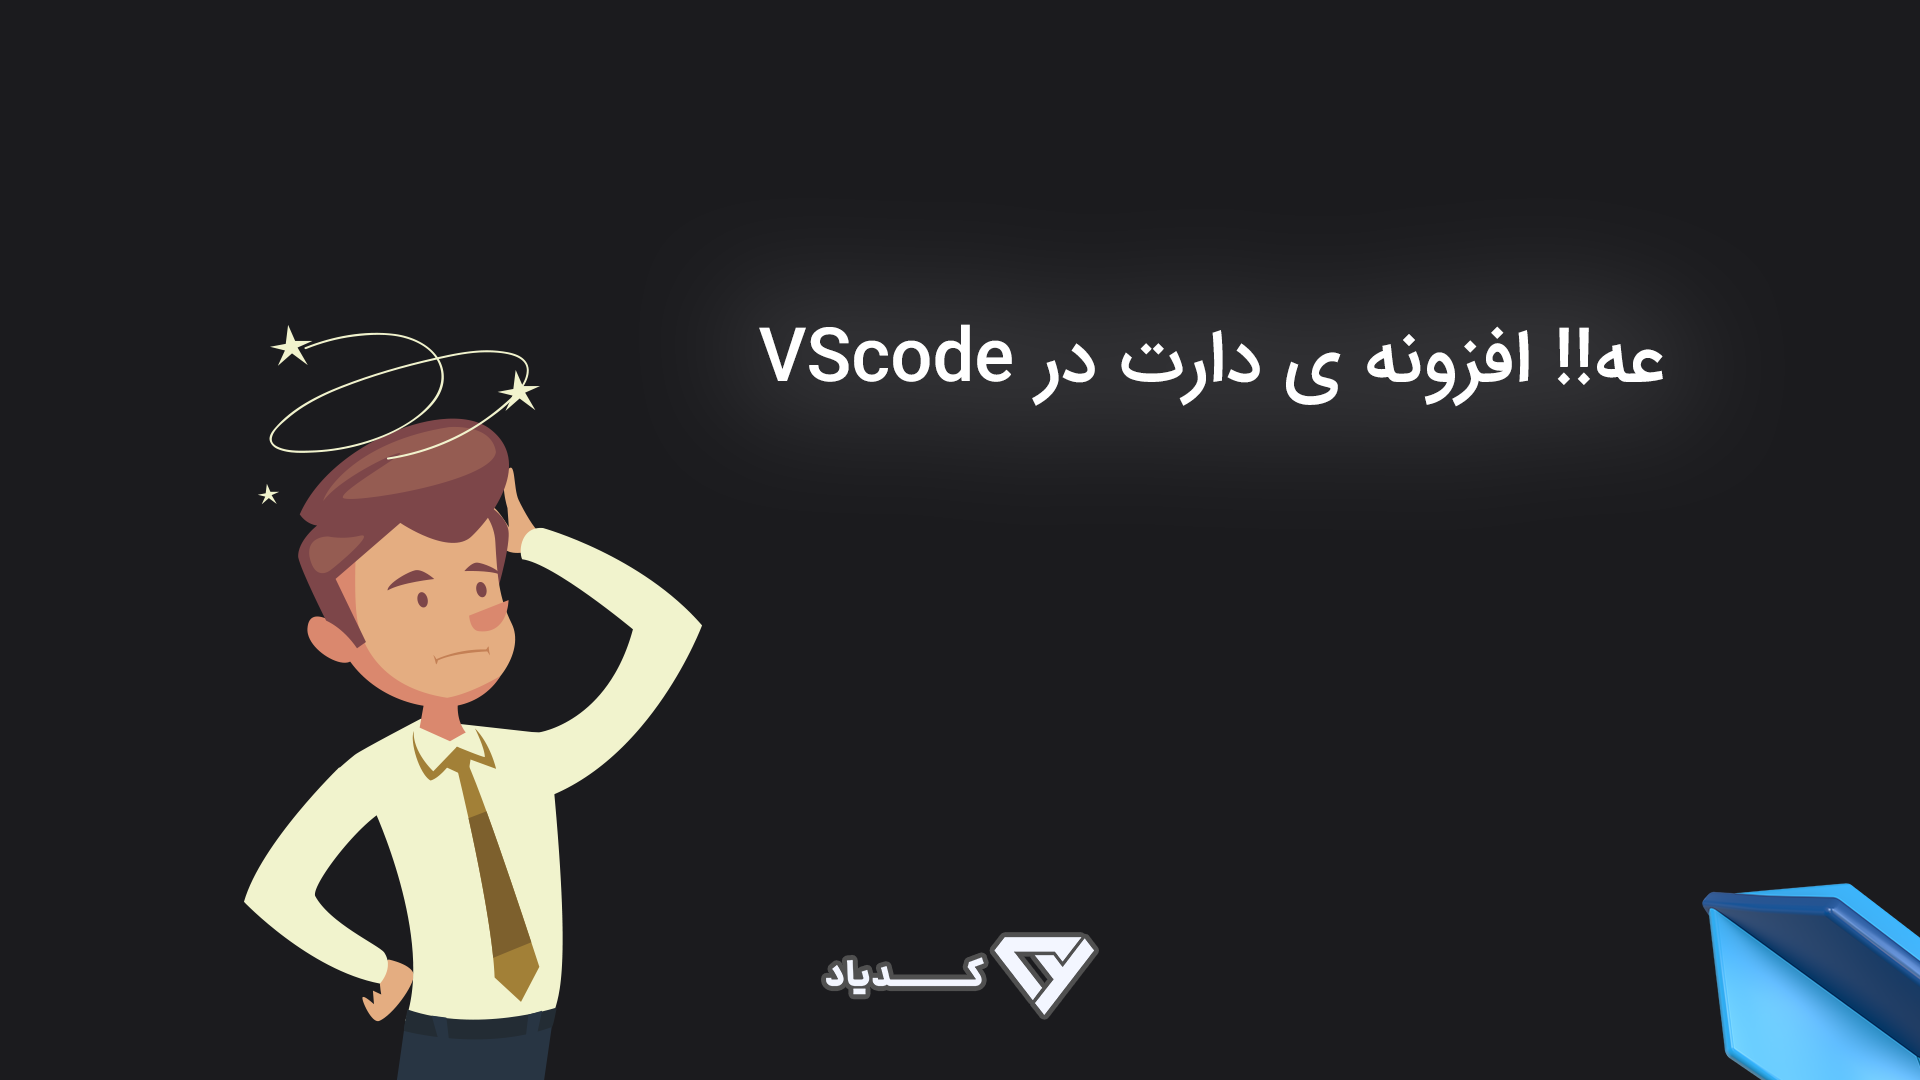 فعال سازی روی VScode